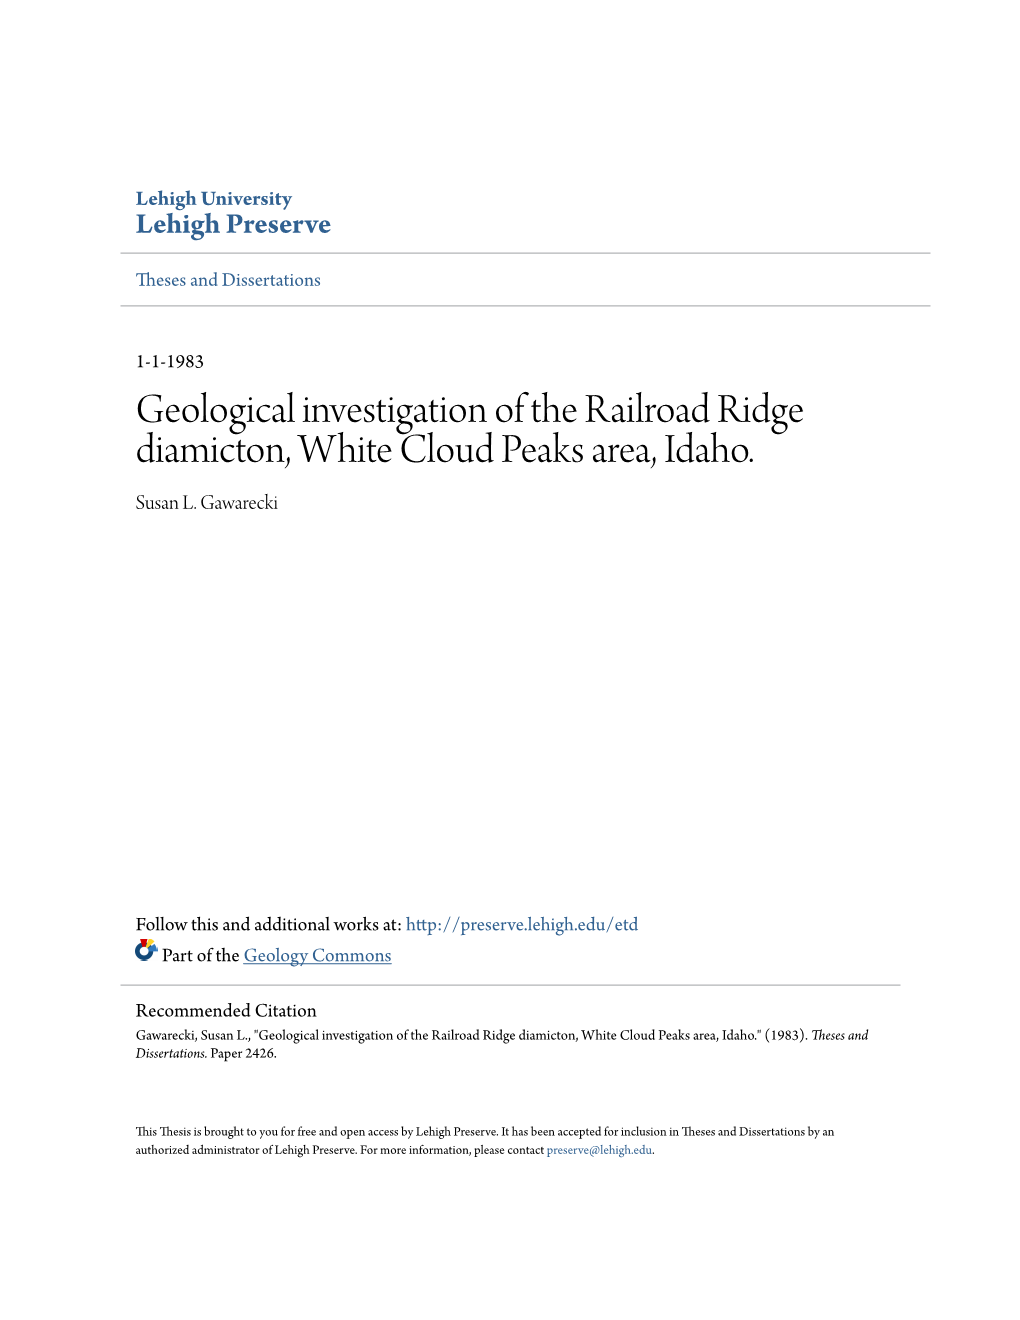 Geological Investigation of the Railroad Ridge Diamicton, White Cloud Peaks Area, Idaho. Susan L